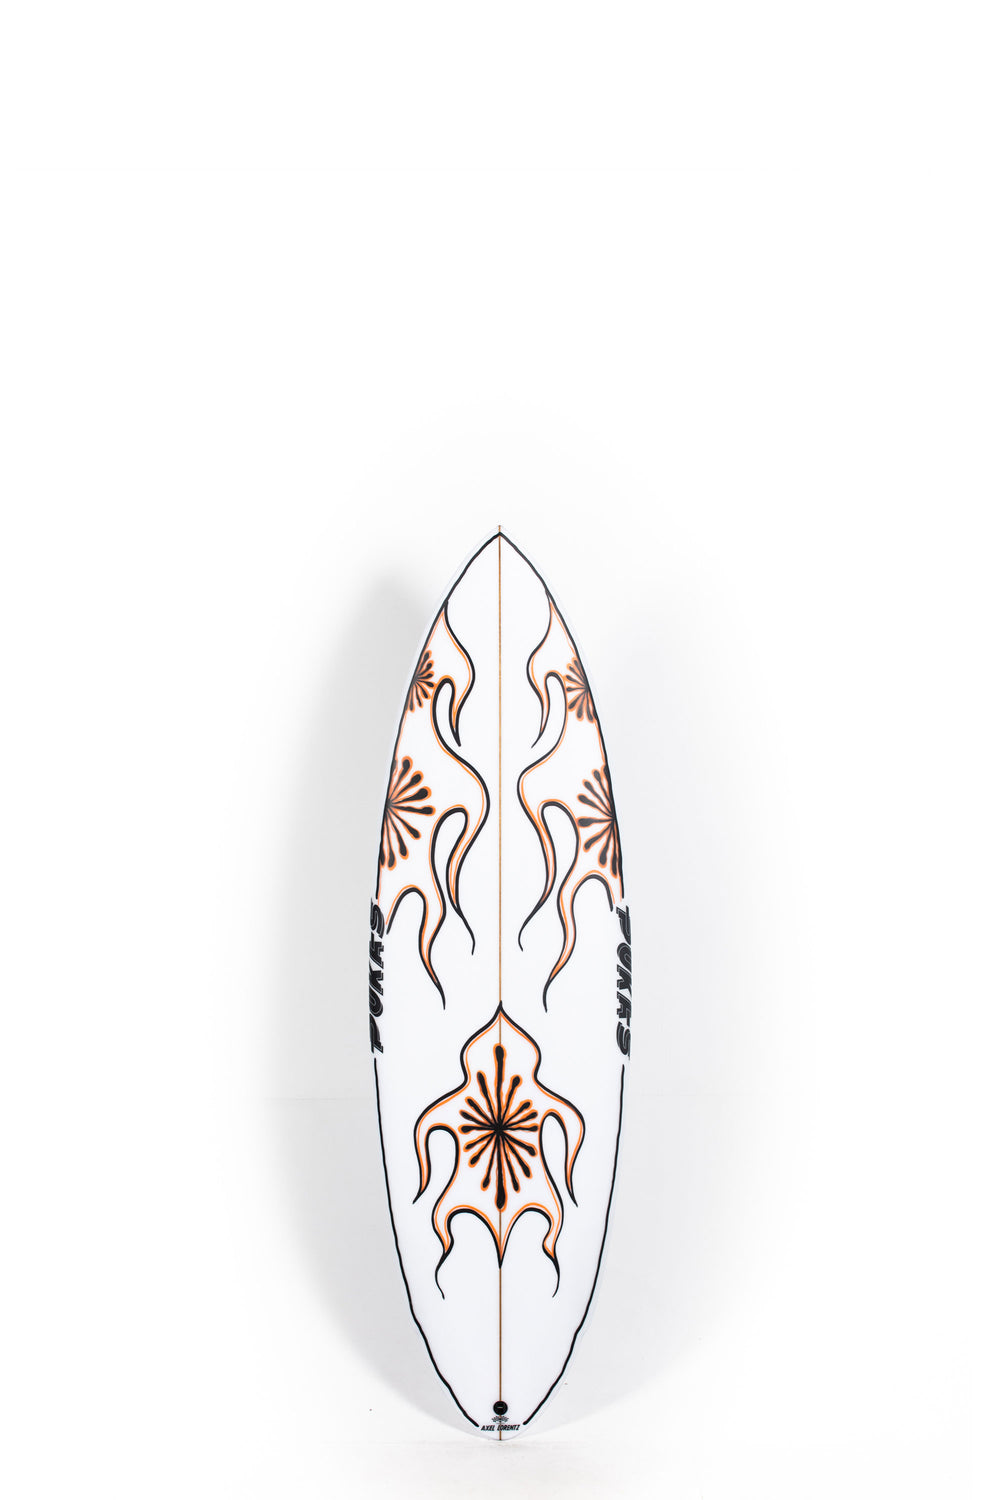 Pukas Surf Shop - Pukas Surfboards - ACID PLAN by Axel Lorentz -  5'8